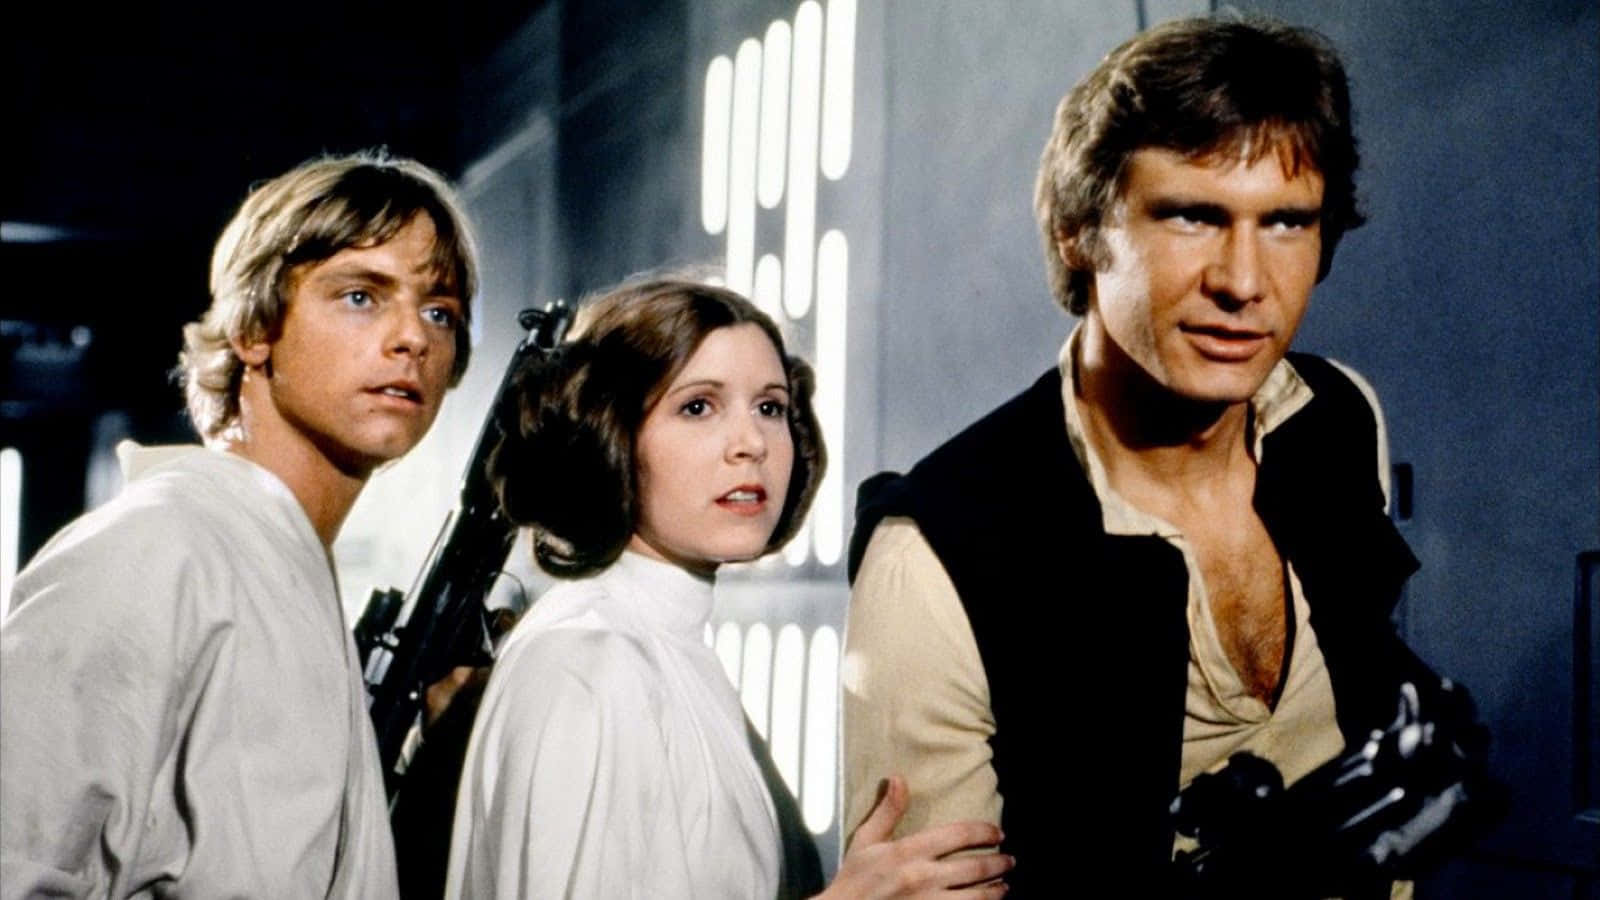 Luke Skywalker battles Darth Vader on an epic quest to save the galaxy Wallpaper